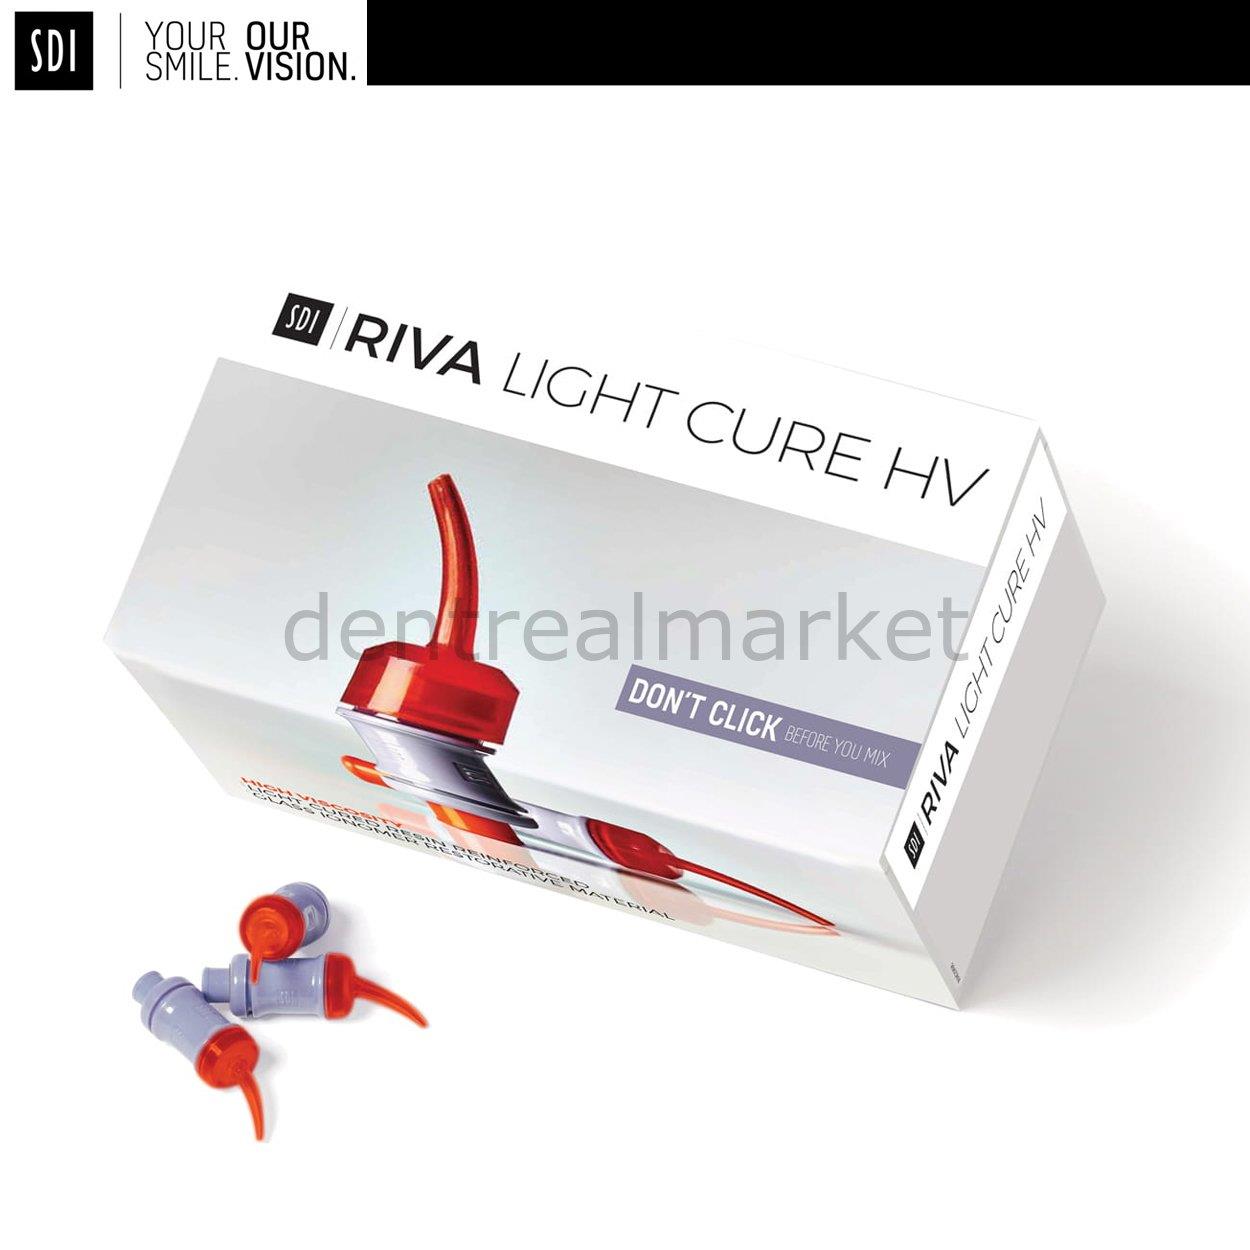 Riva Light Cure HV - Light Cured Resin Reinforced Glass Ionomer Restorative Material - A2